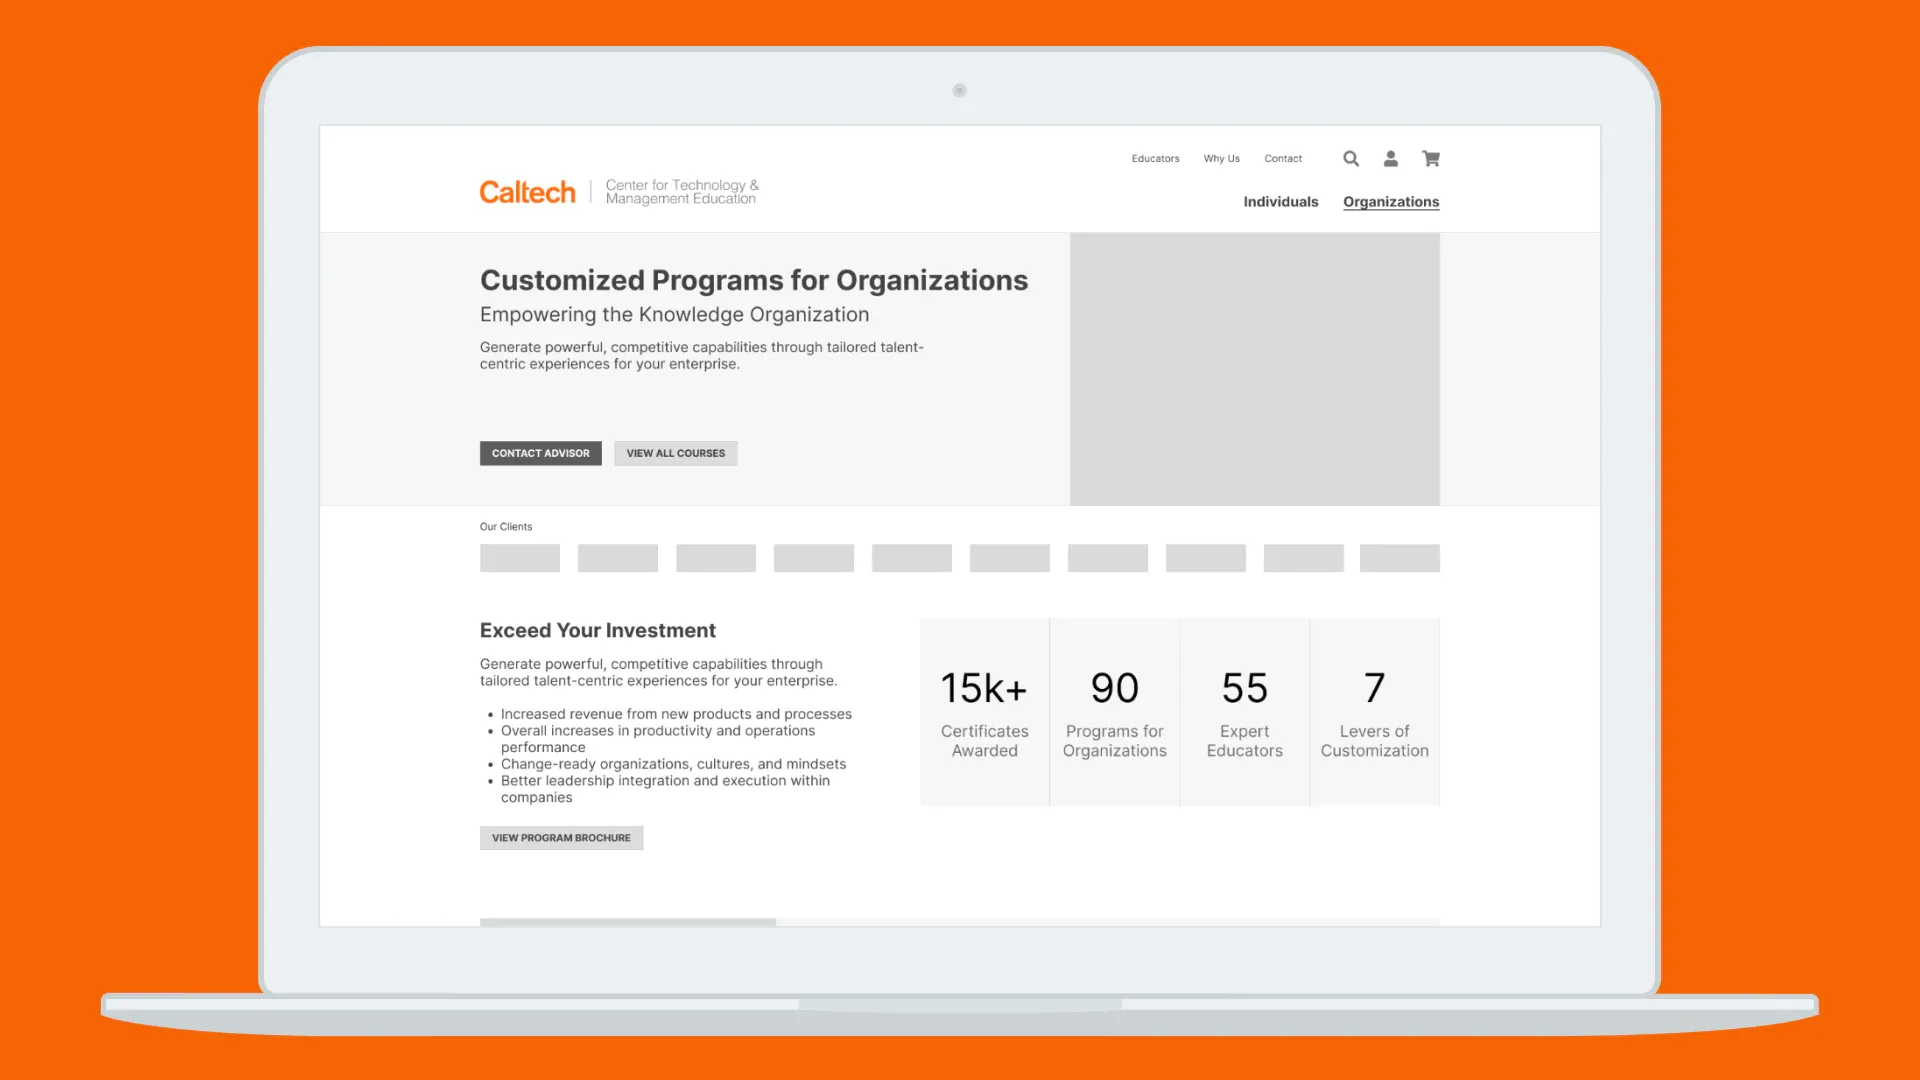 Caltech CTME Responsive eCommerce UX Design